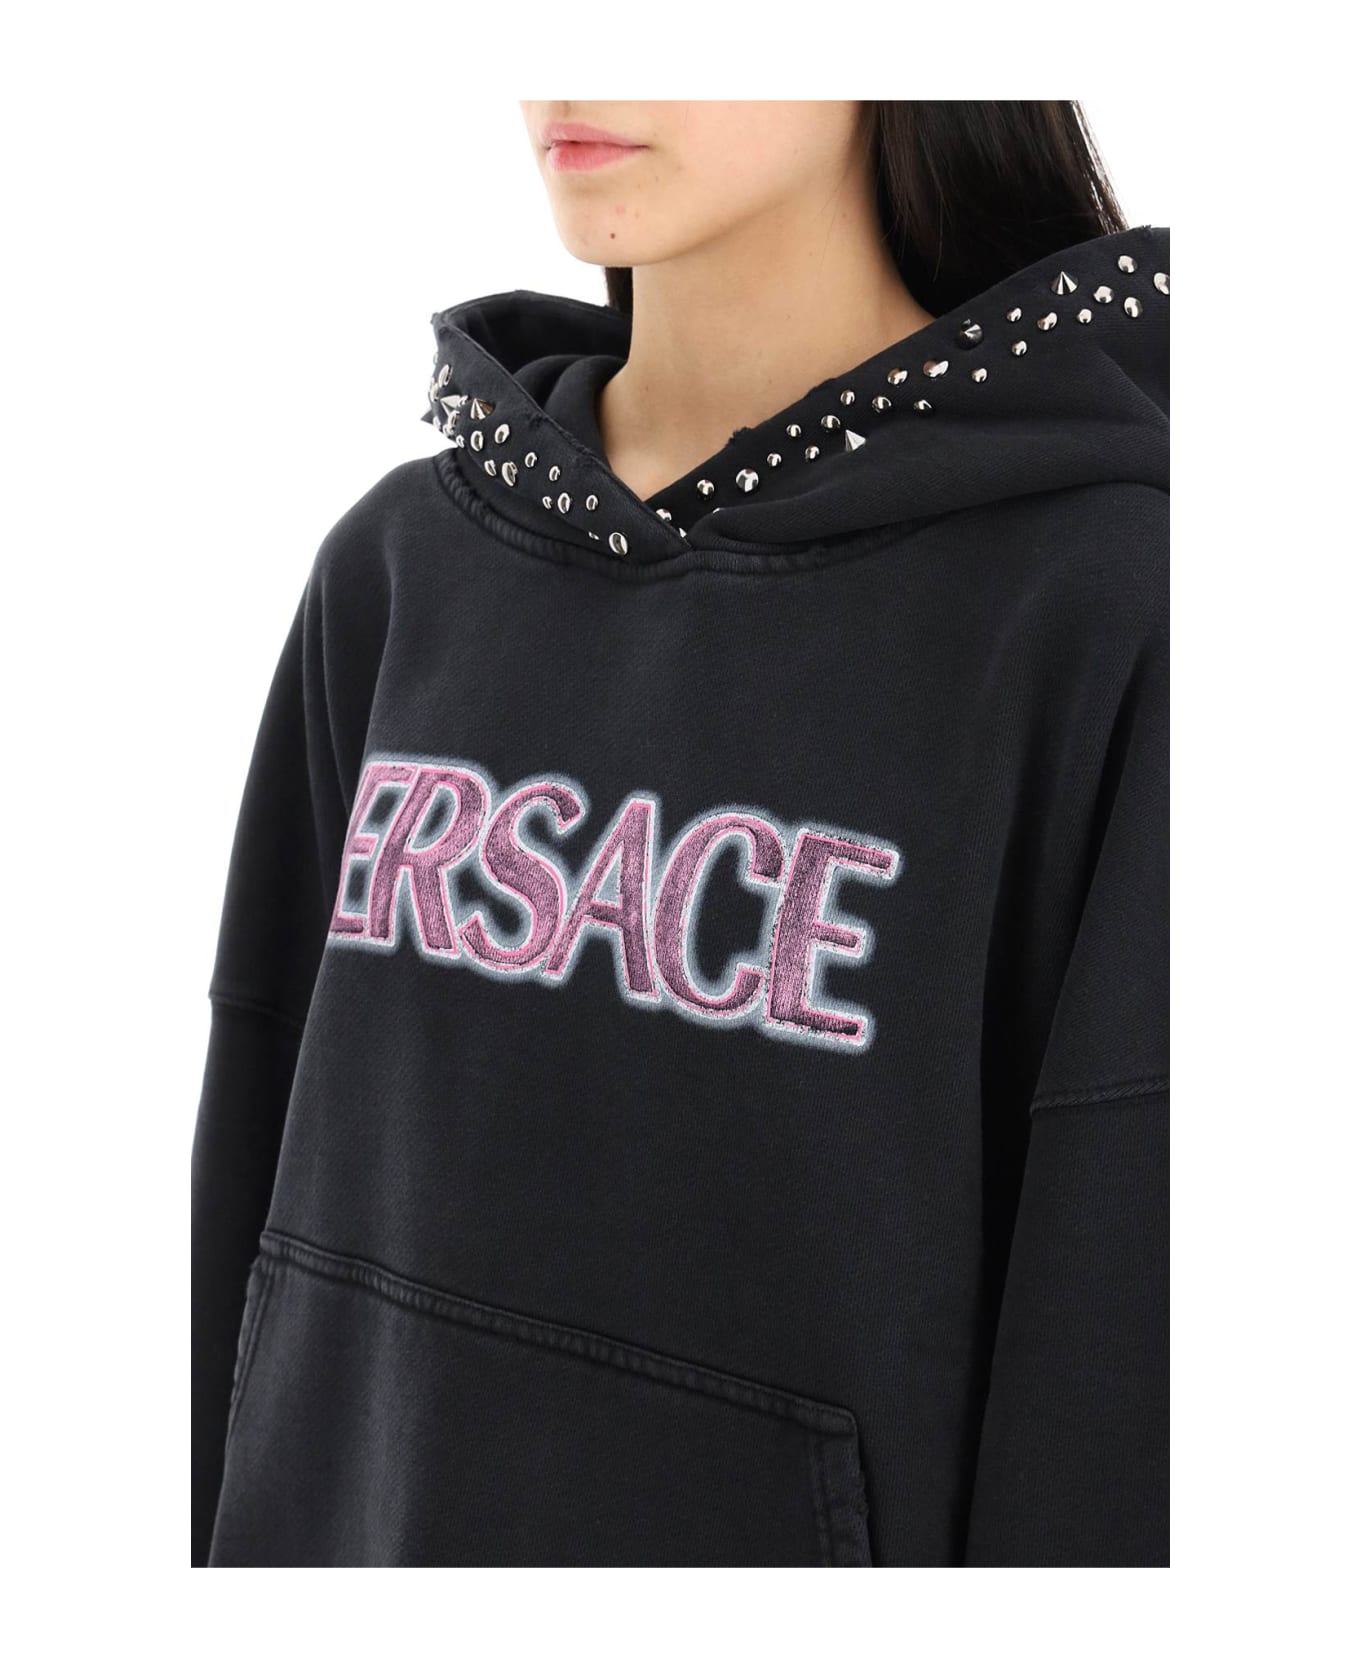 Versace Cotton Logo Sweatshirt - Black フリース